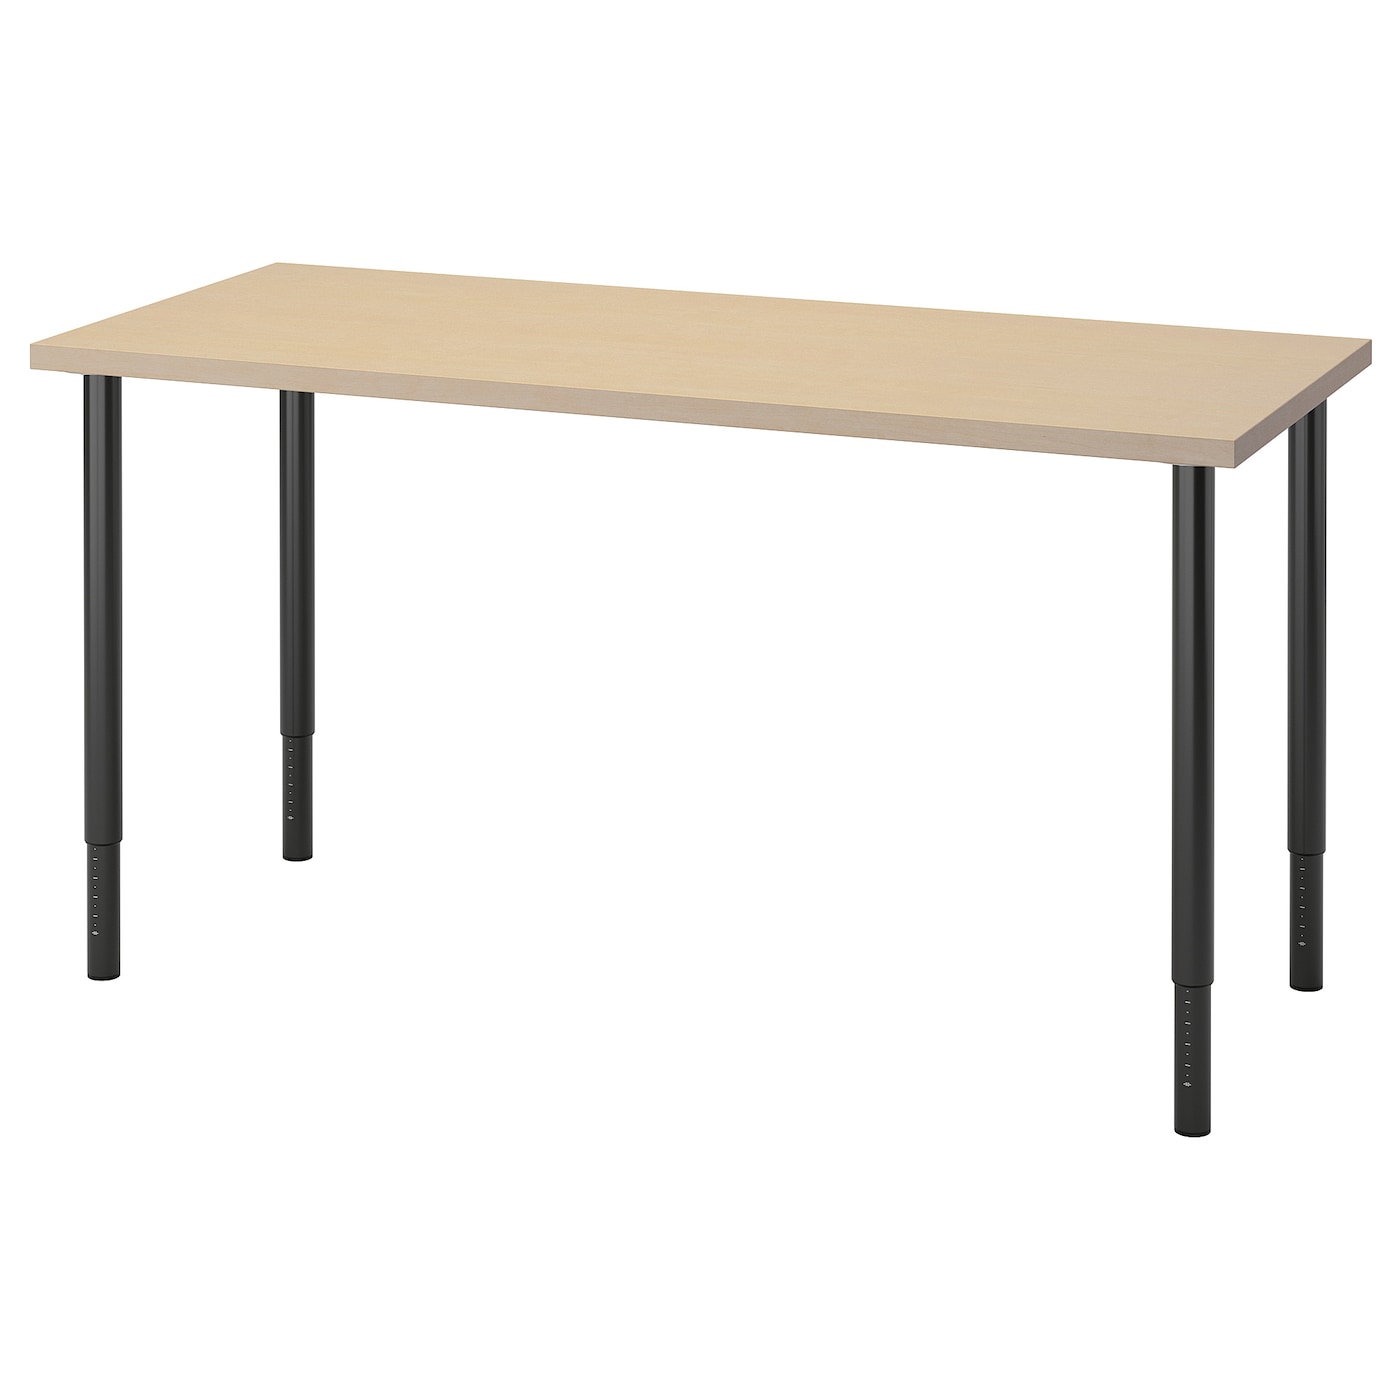 Рабочий стол - IKEA MÅLSKYTT/MALSKYTT/OLOV , 140х60 см, береза/черный, МОЛСКЮТТ/ОЛОВ ИКЕА